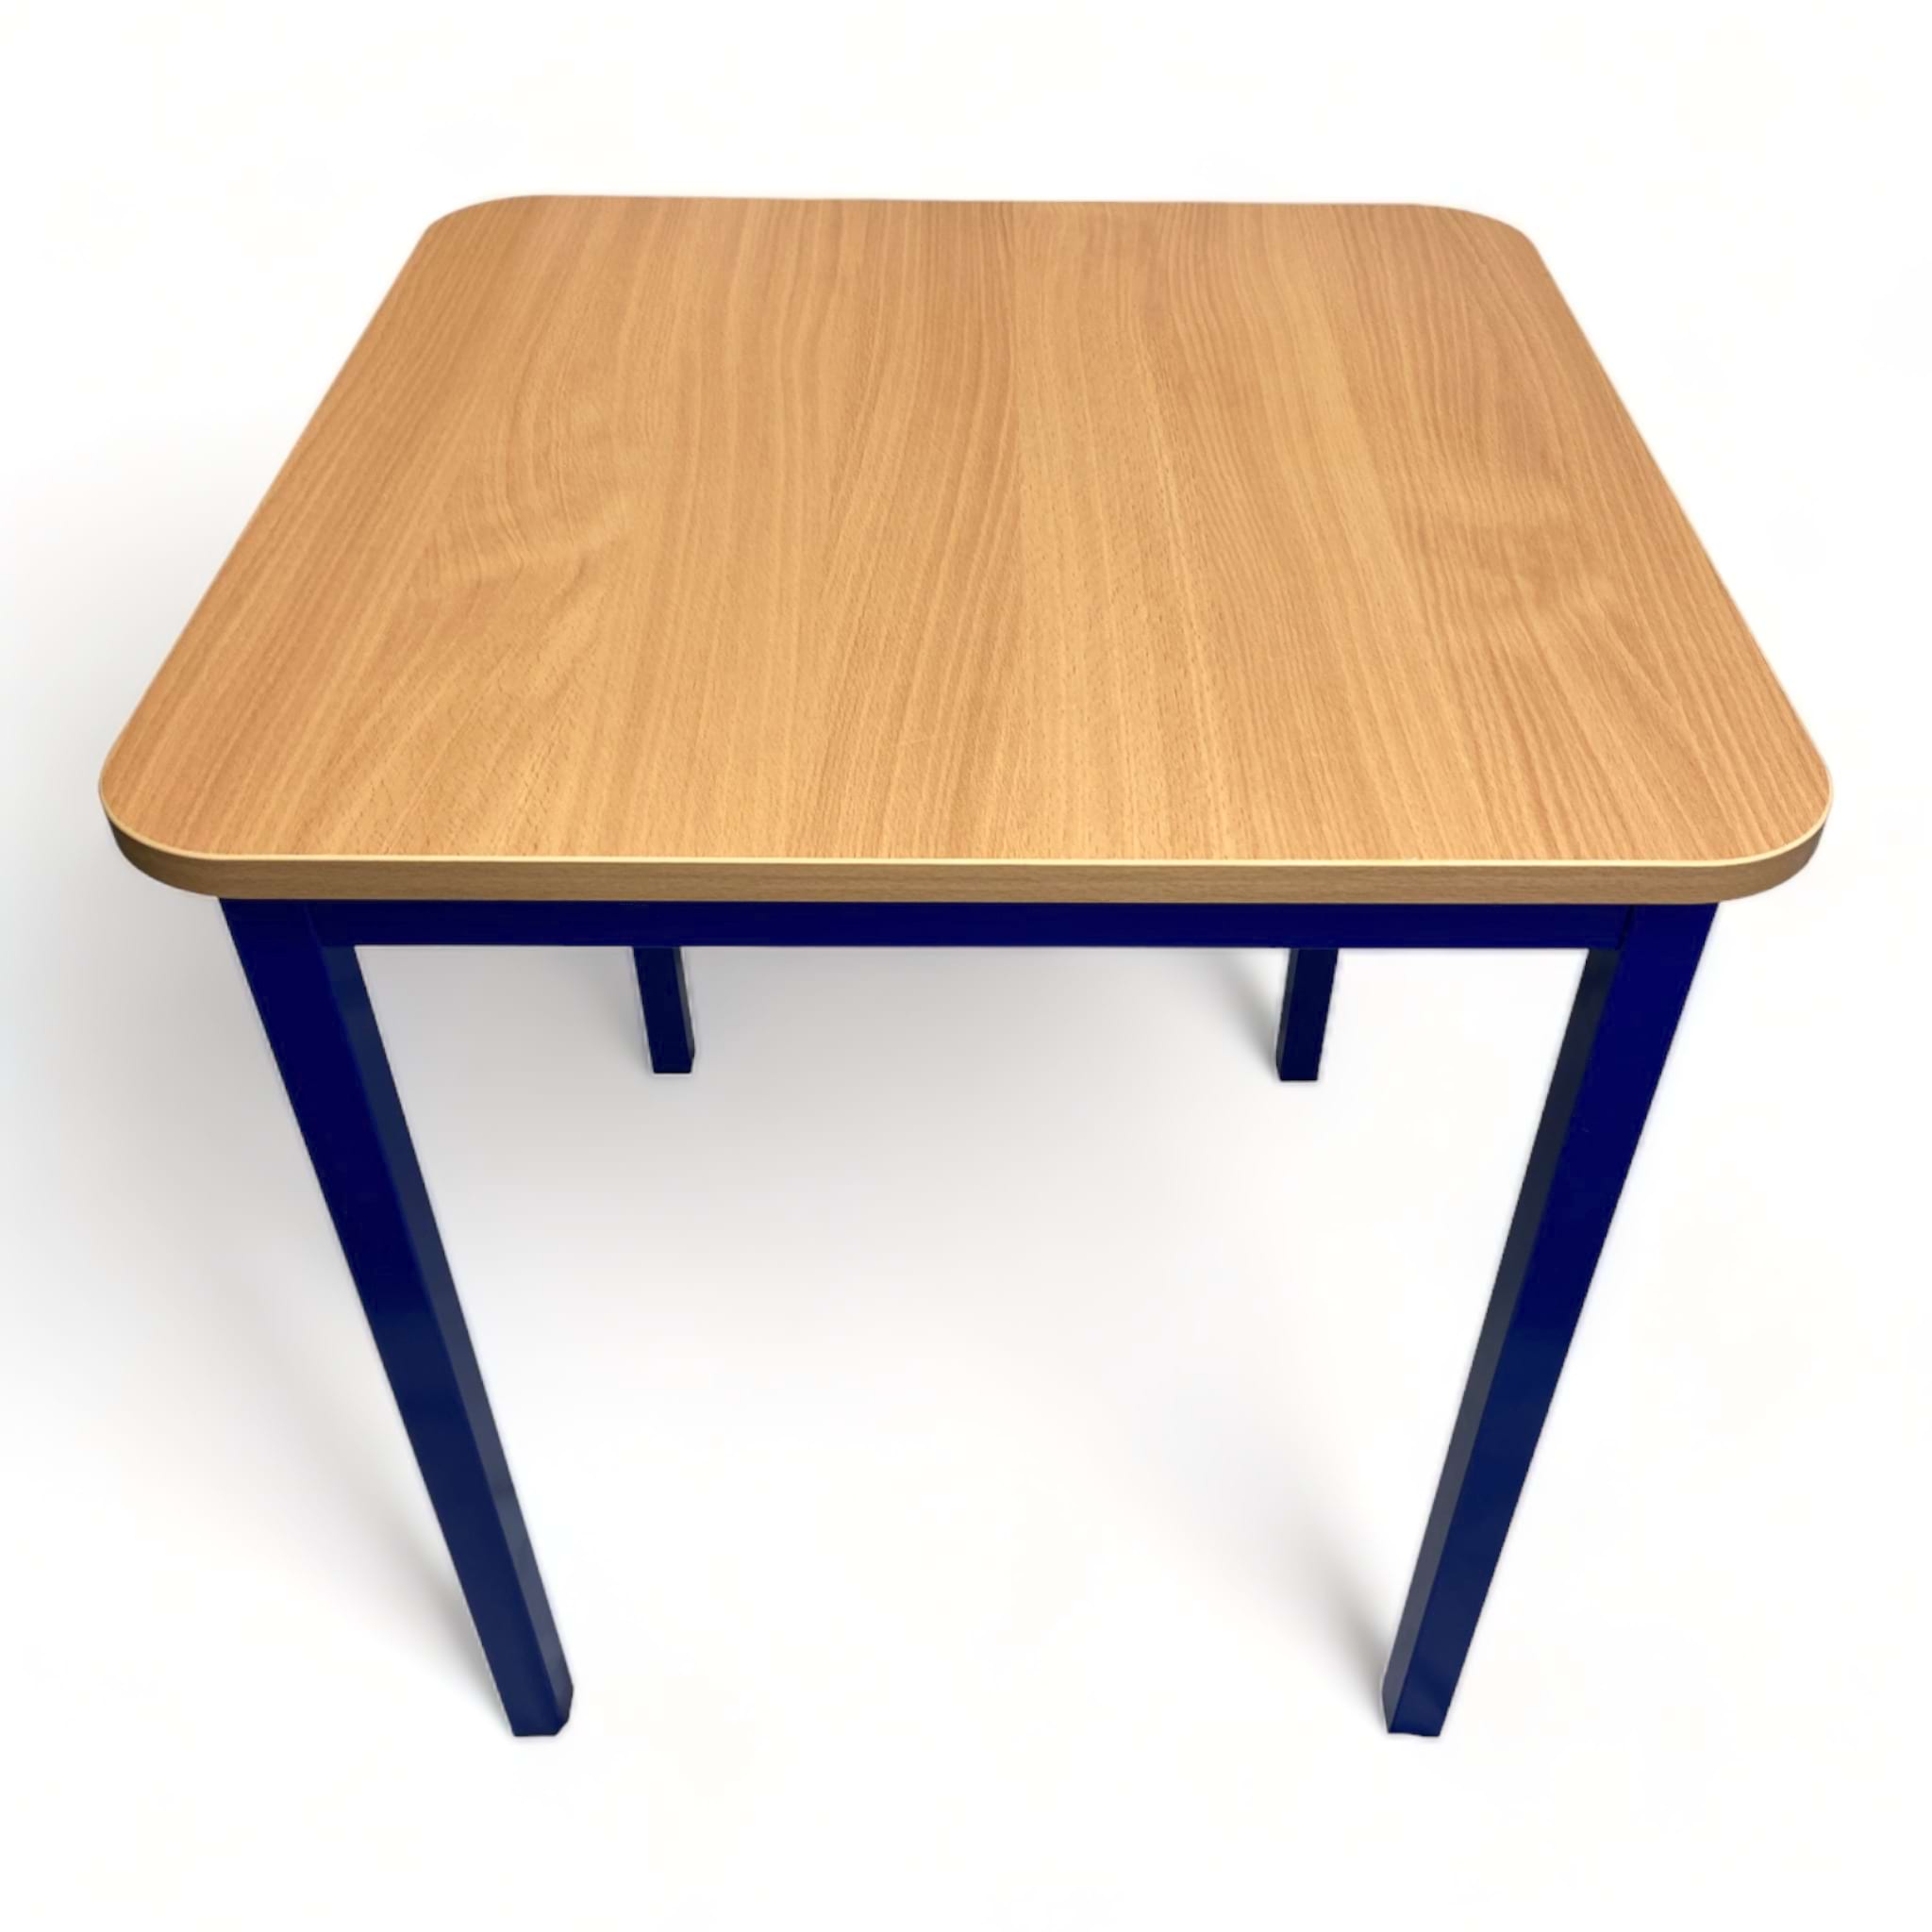 Steel Square Single School Table 64cm - Blue